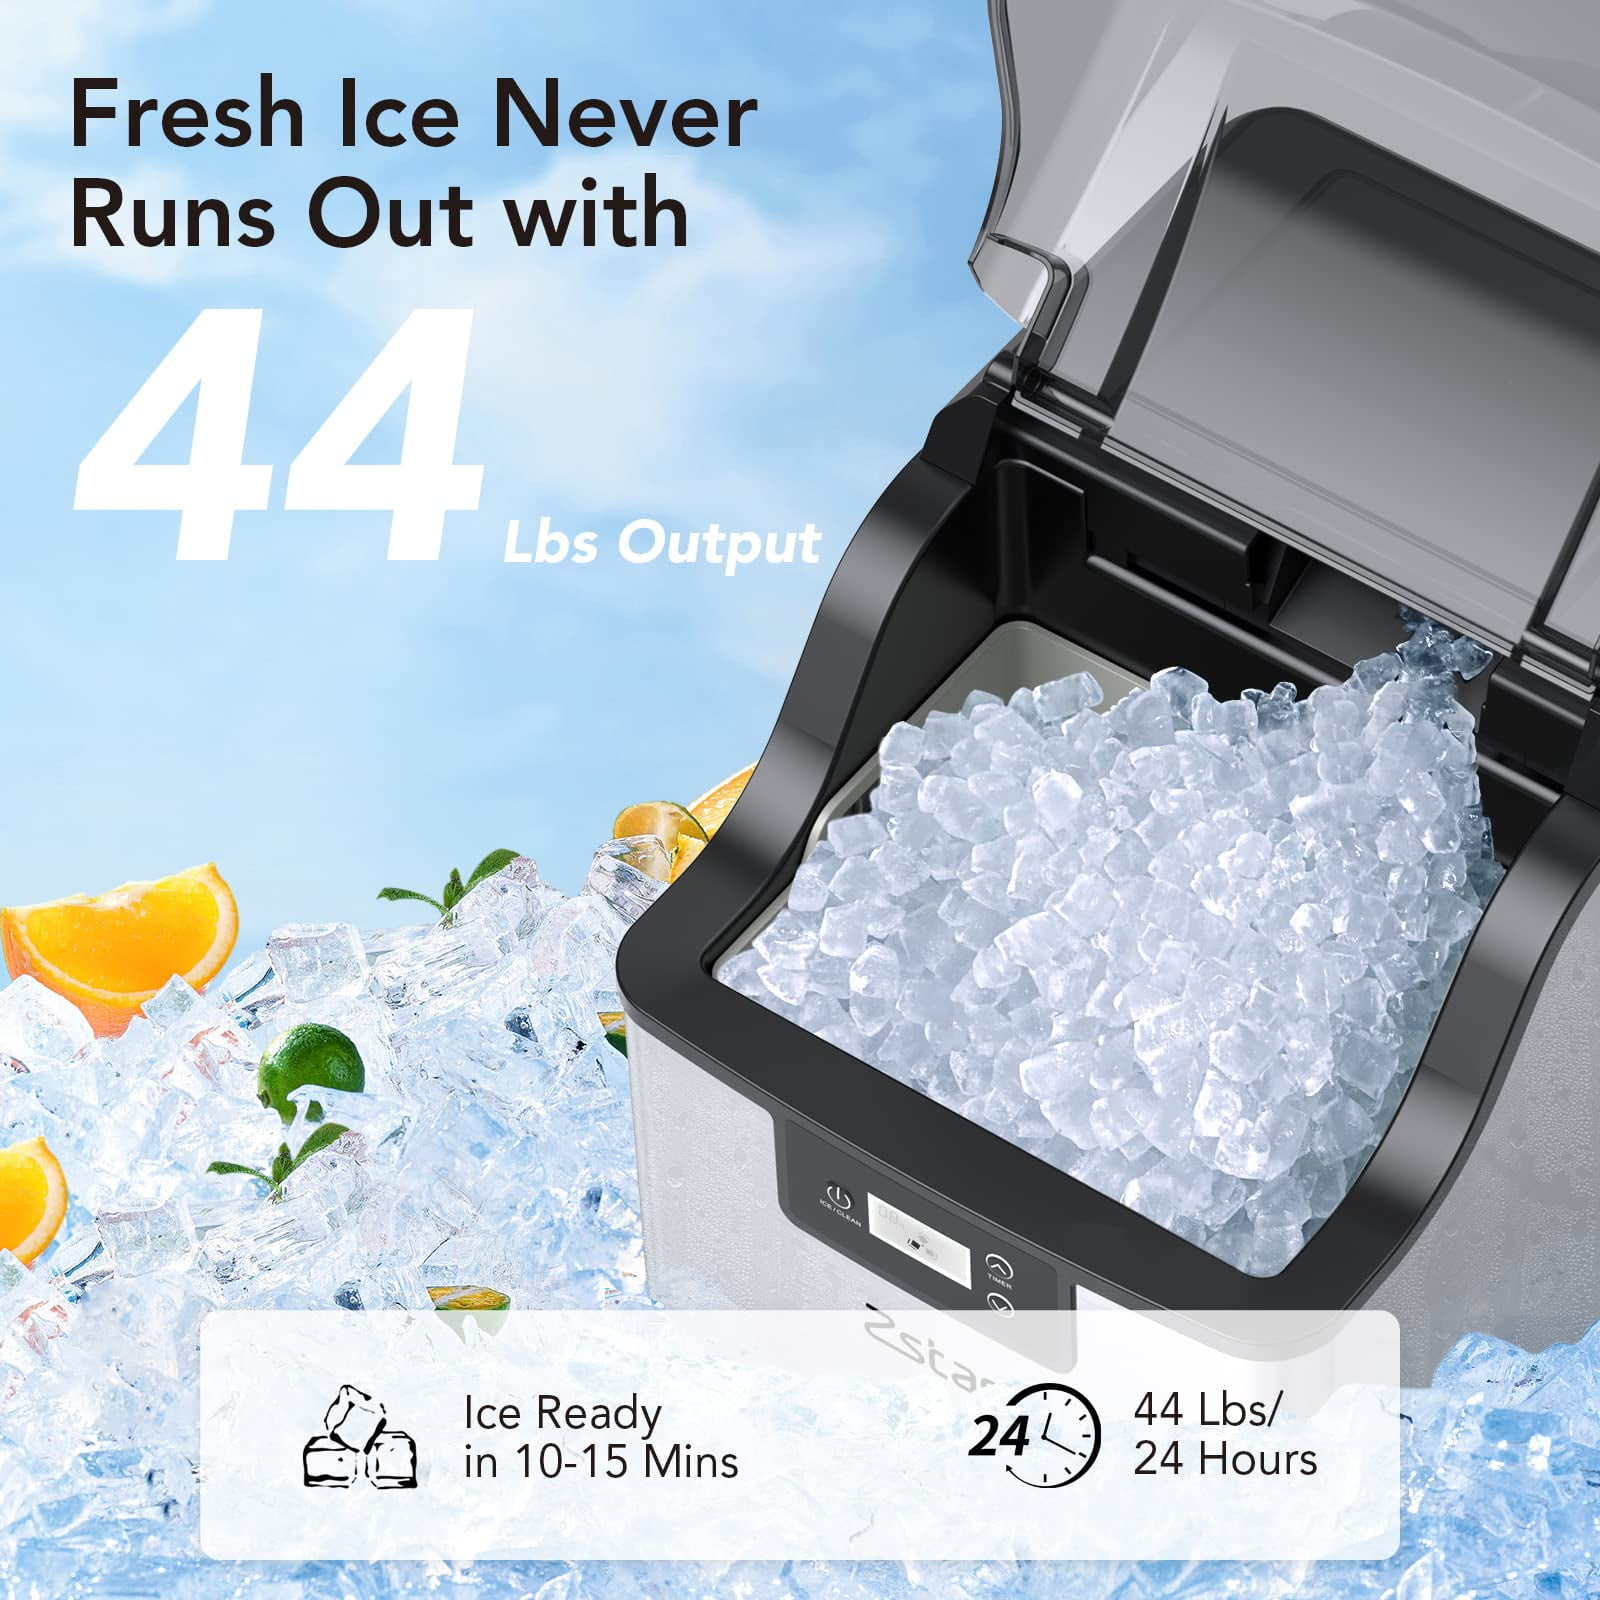 Wamife Countertop Nugget Ice Maker for $270 - WA-IC001